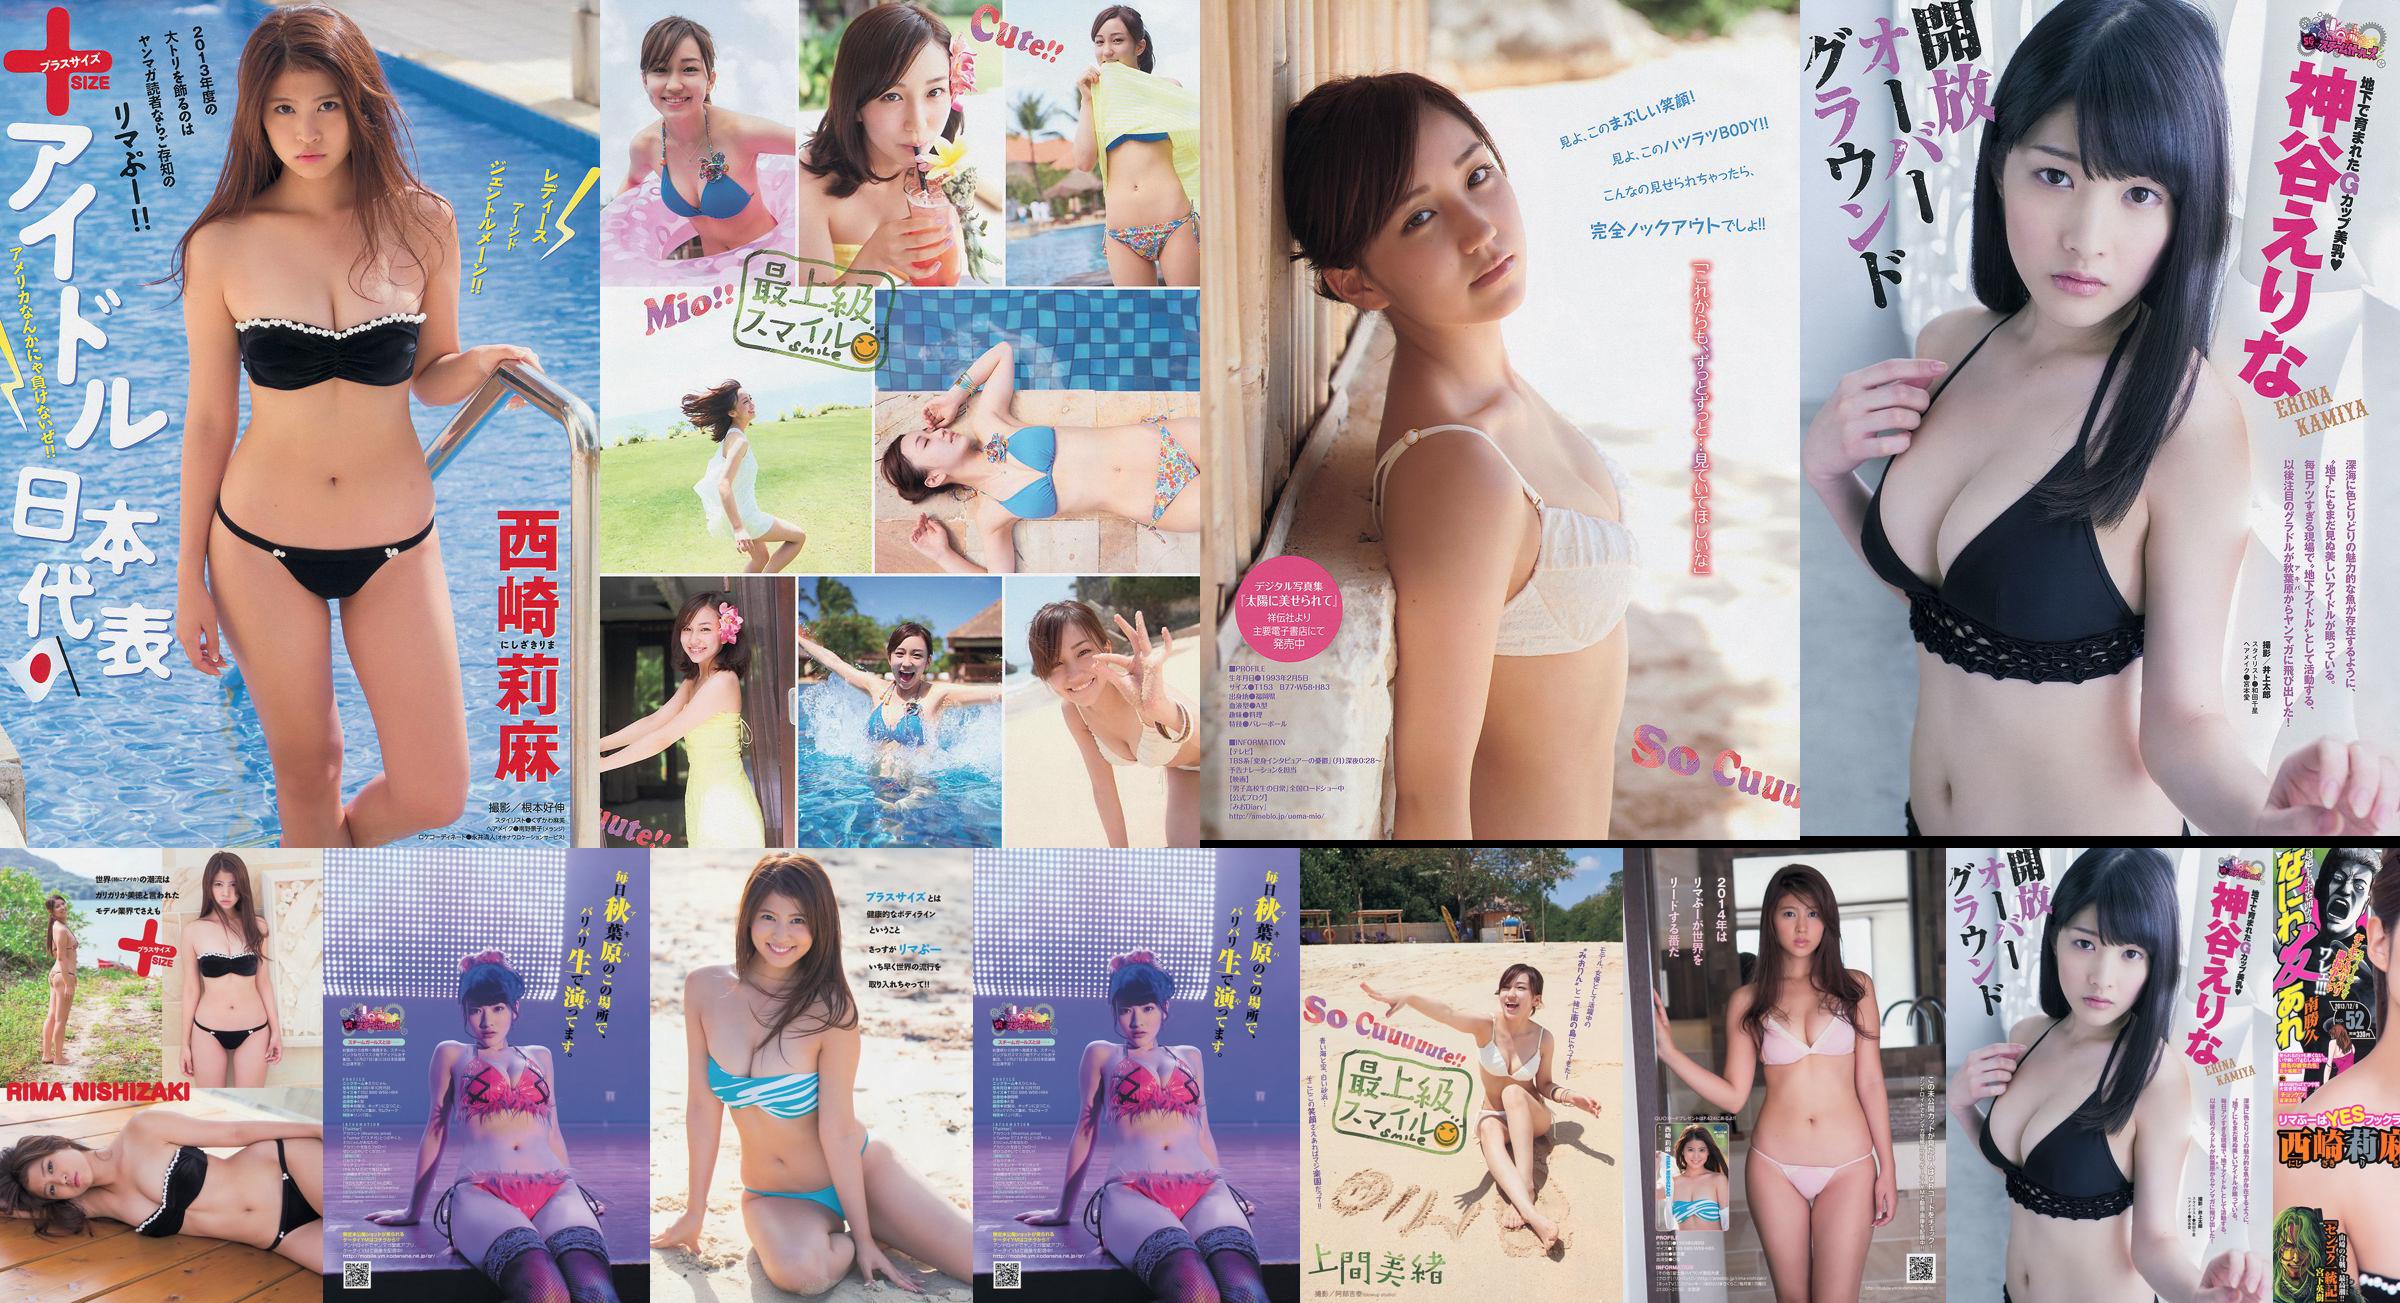 [Tạp chí trẻ] Rima Nishizaki Mio Uema Erina Kamiya 2013 Ảnh số 52 Moshi No.652500 Trang 2